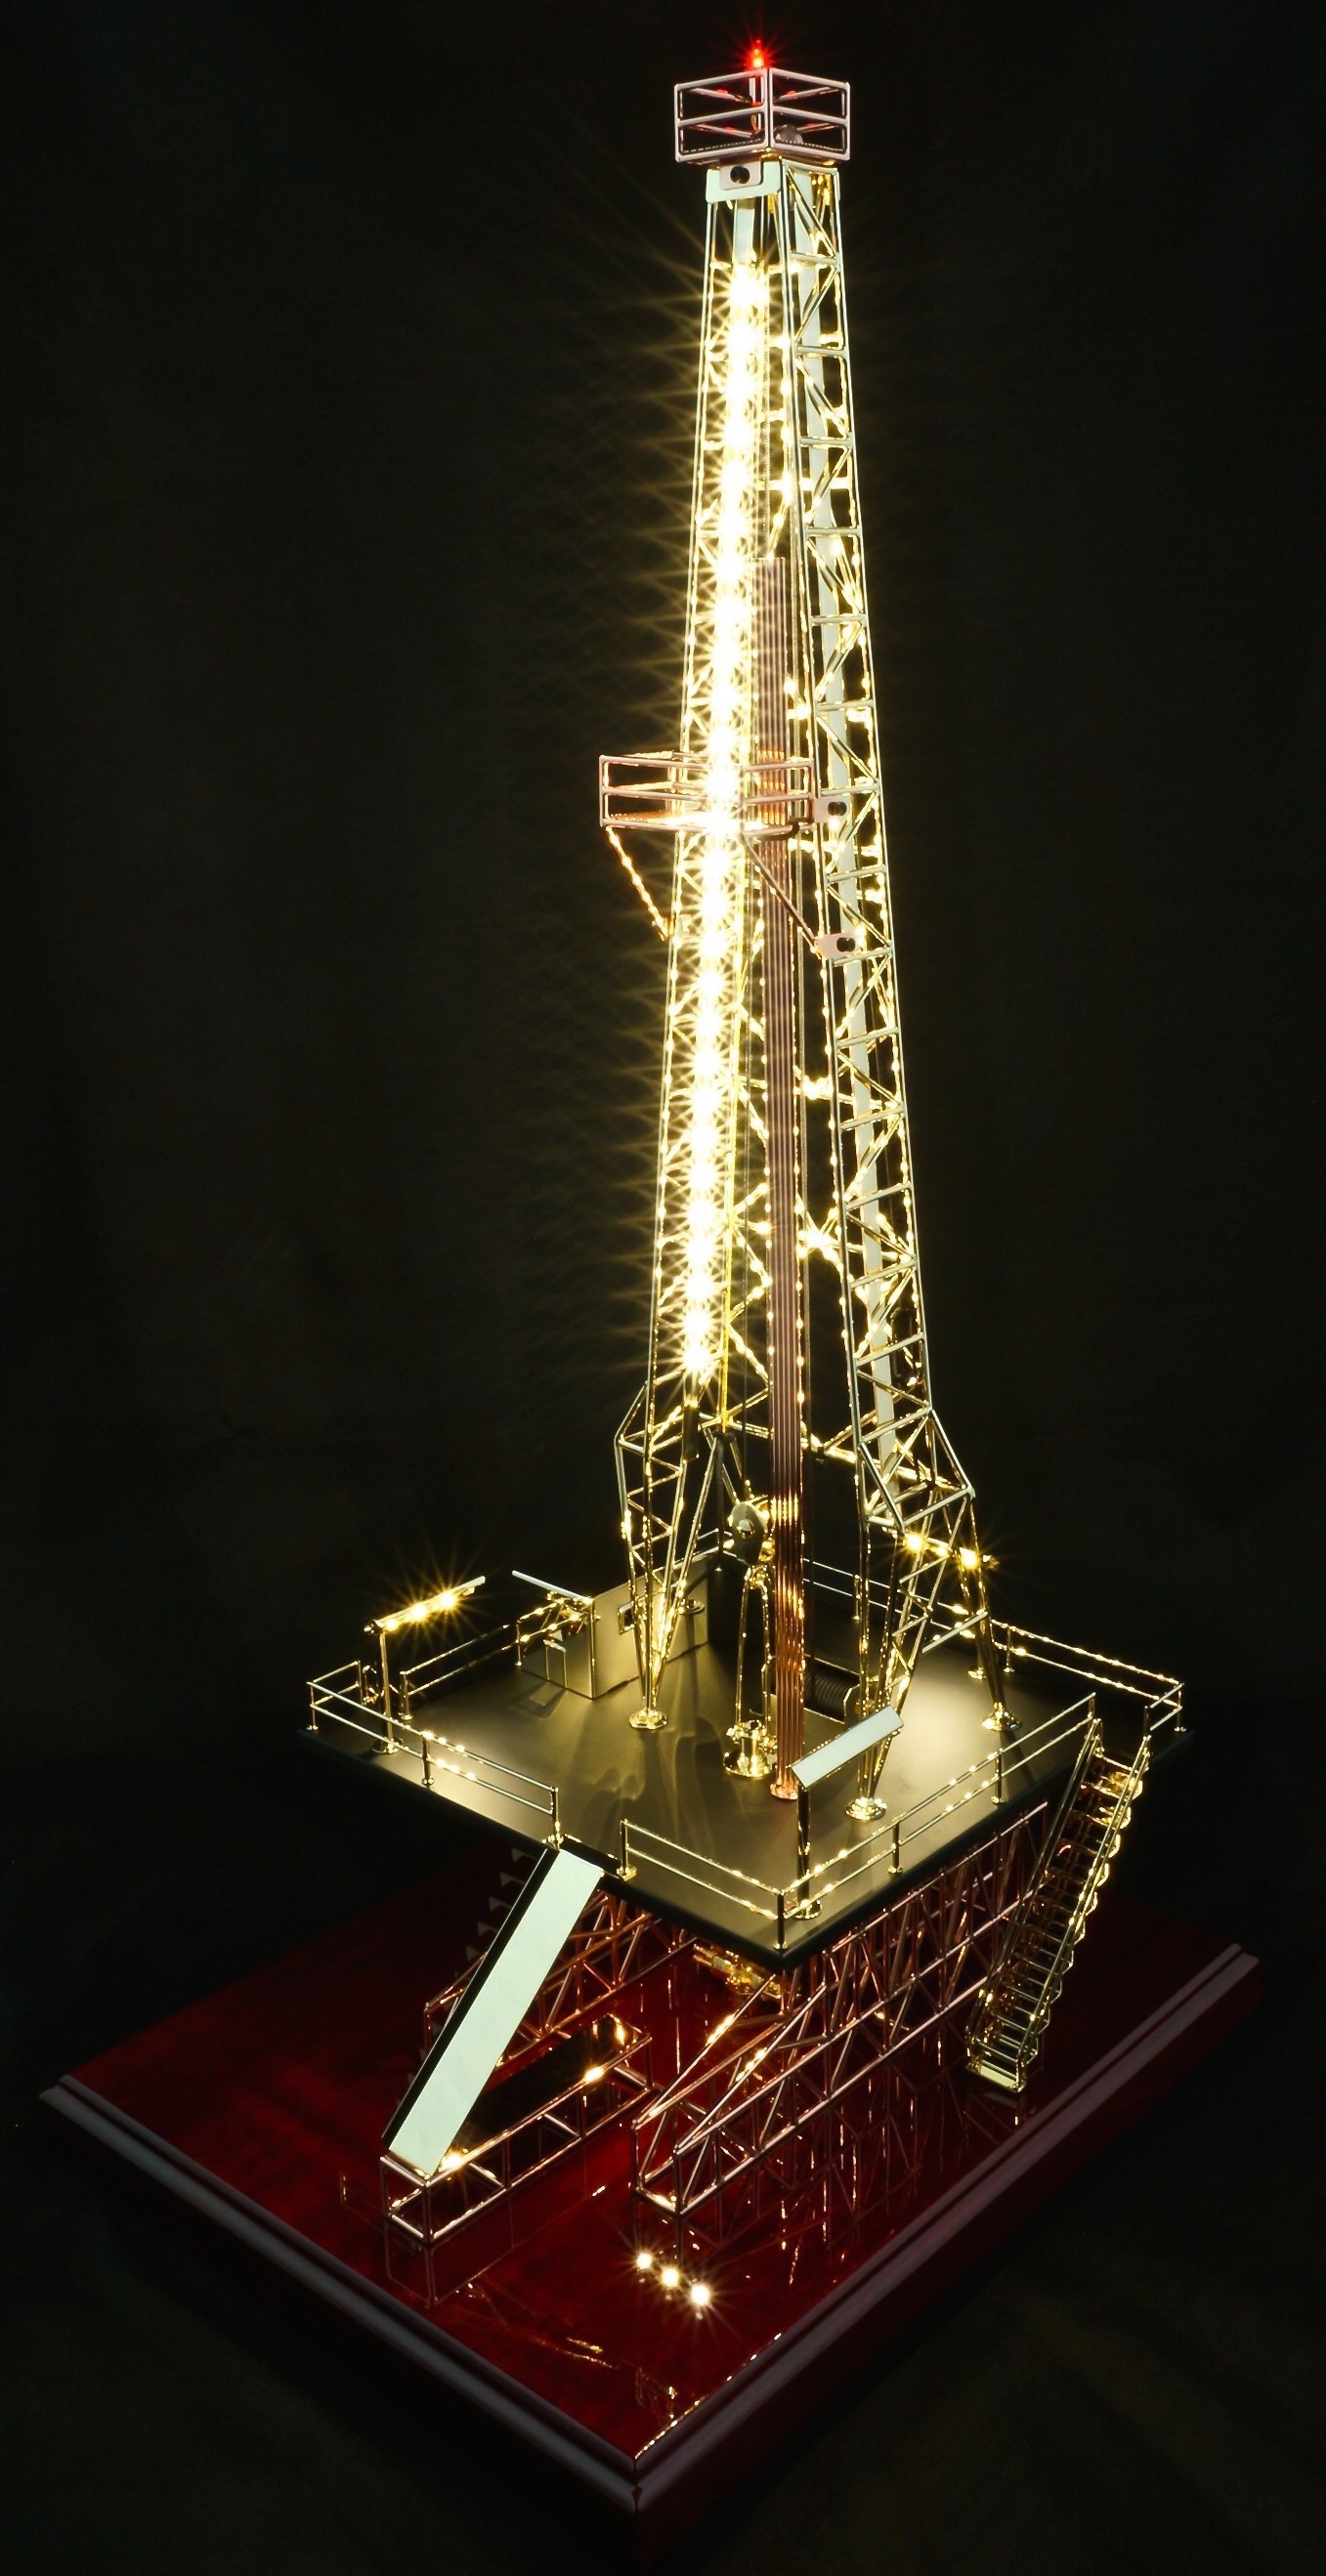 Oilfield drill rig derrick at night with lights